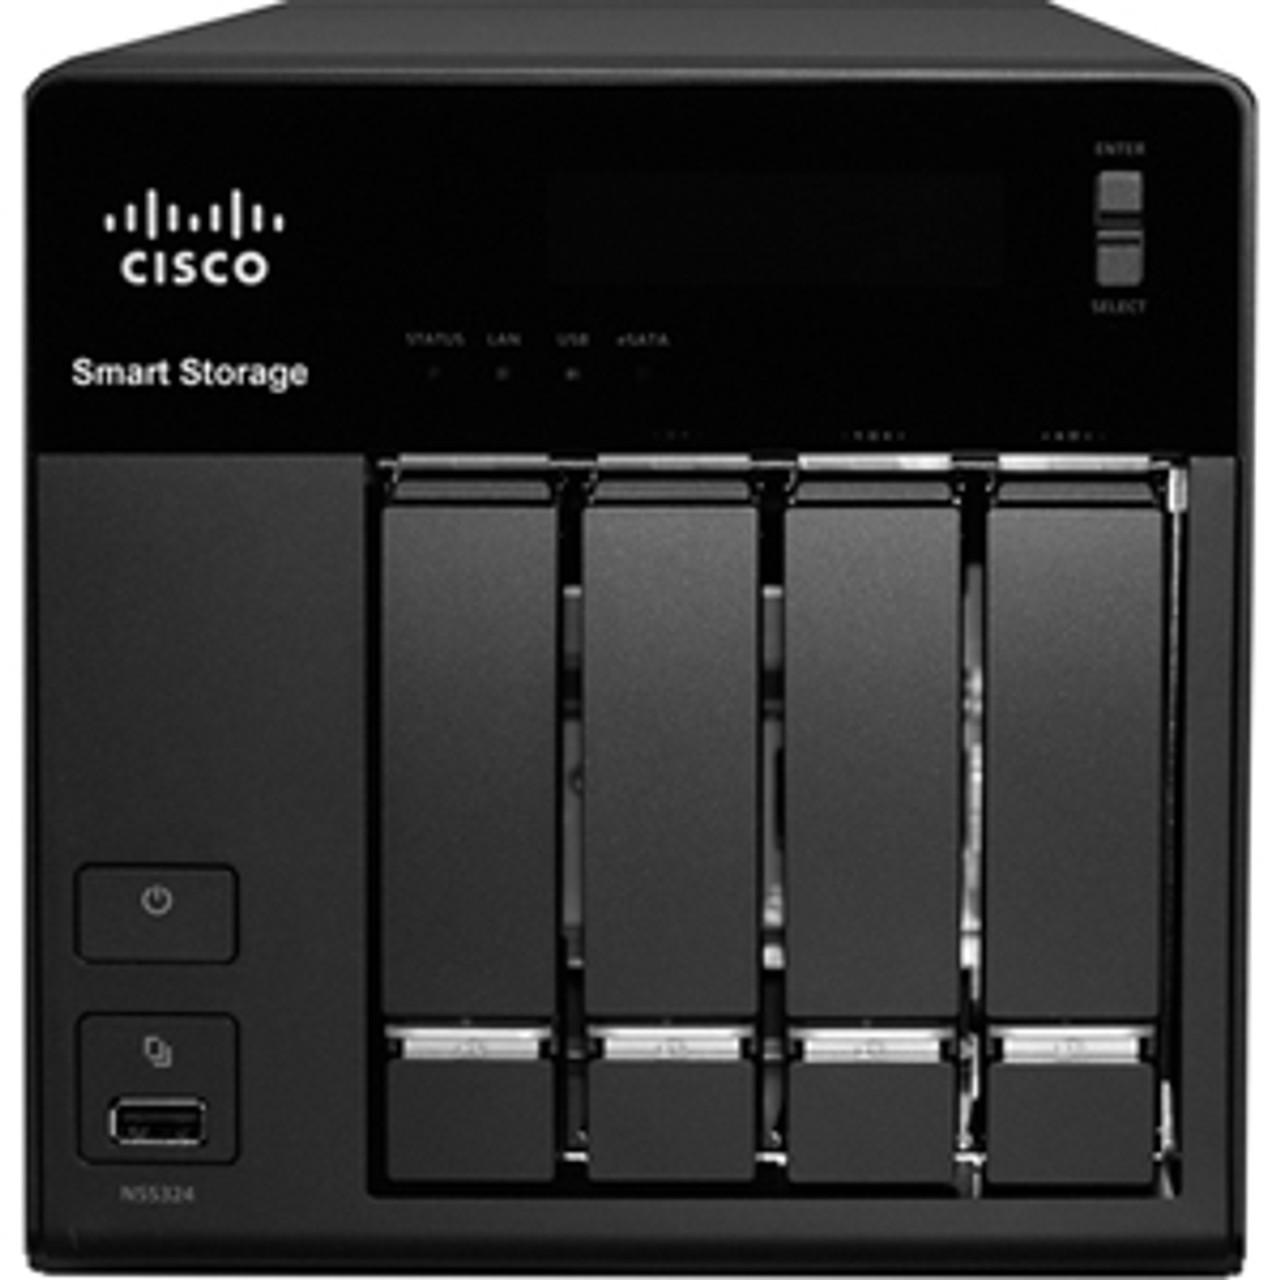 NSS324D00-K9 - Cisco NSS 324 Smart Storage Network Storage Server - Intel Atom D510 1.66 GHz - RJ-45 Network USB eSATA VGA